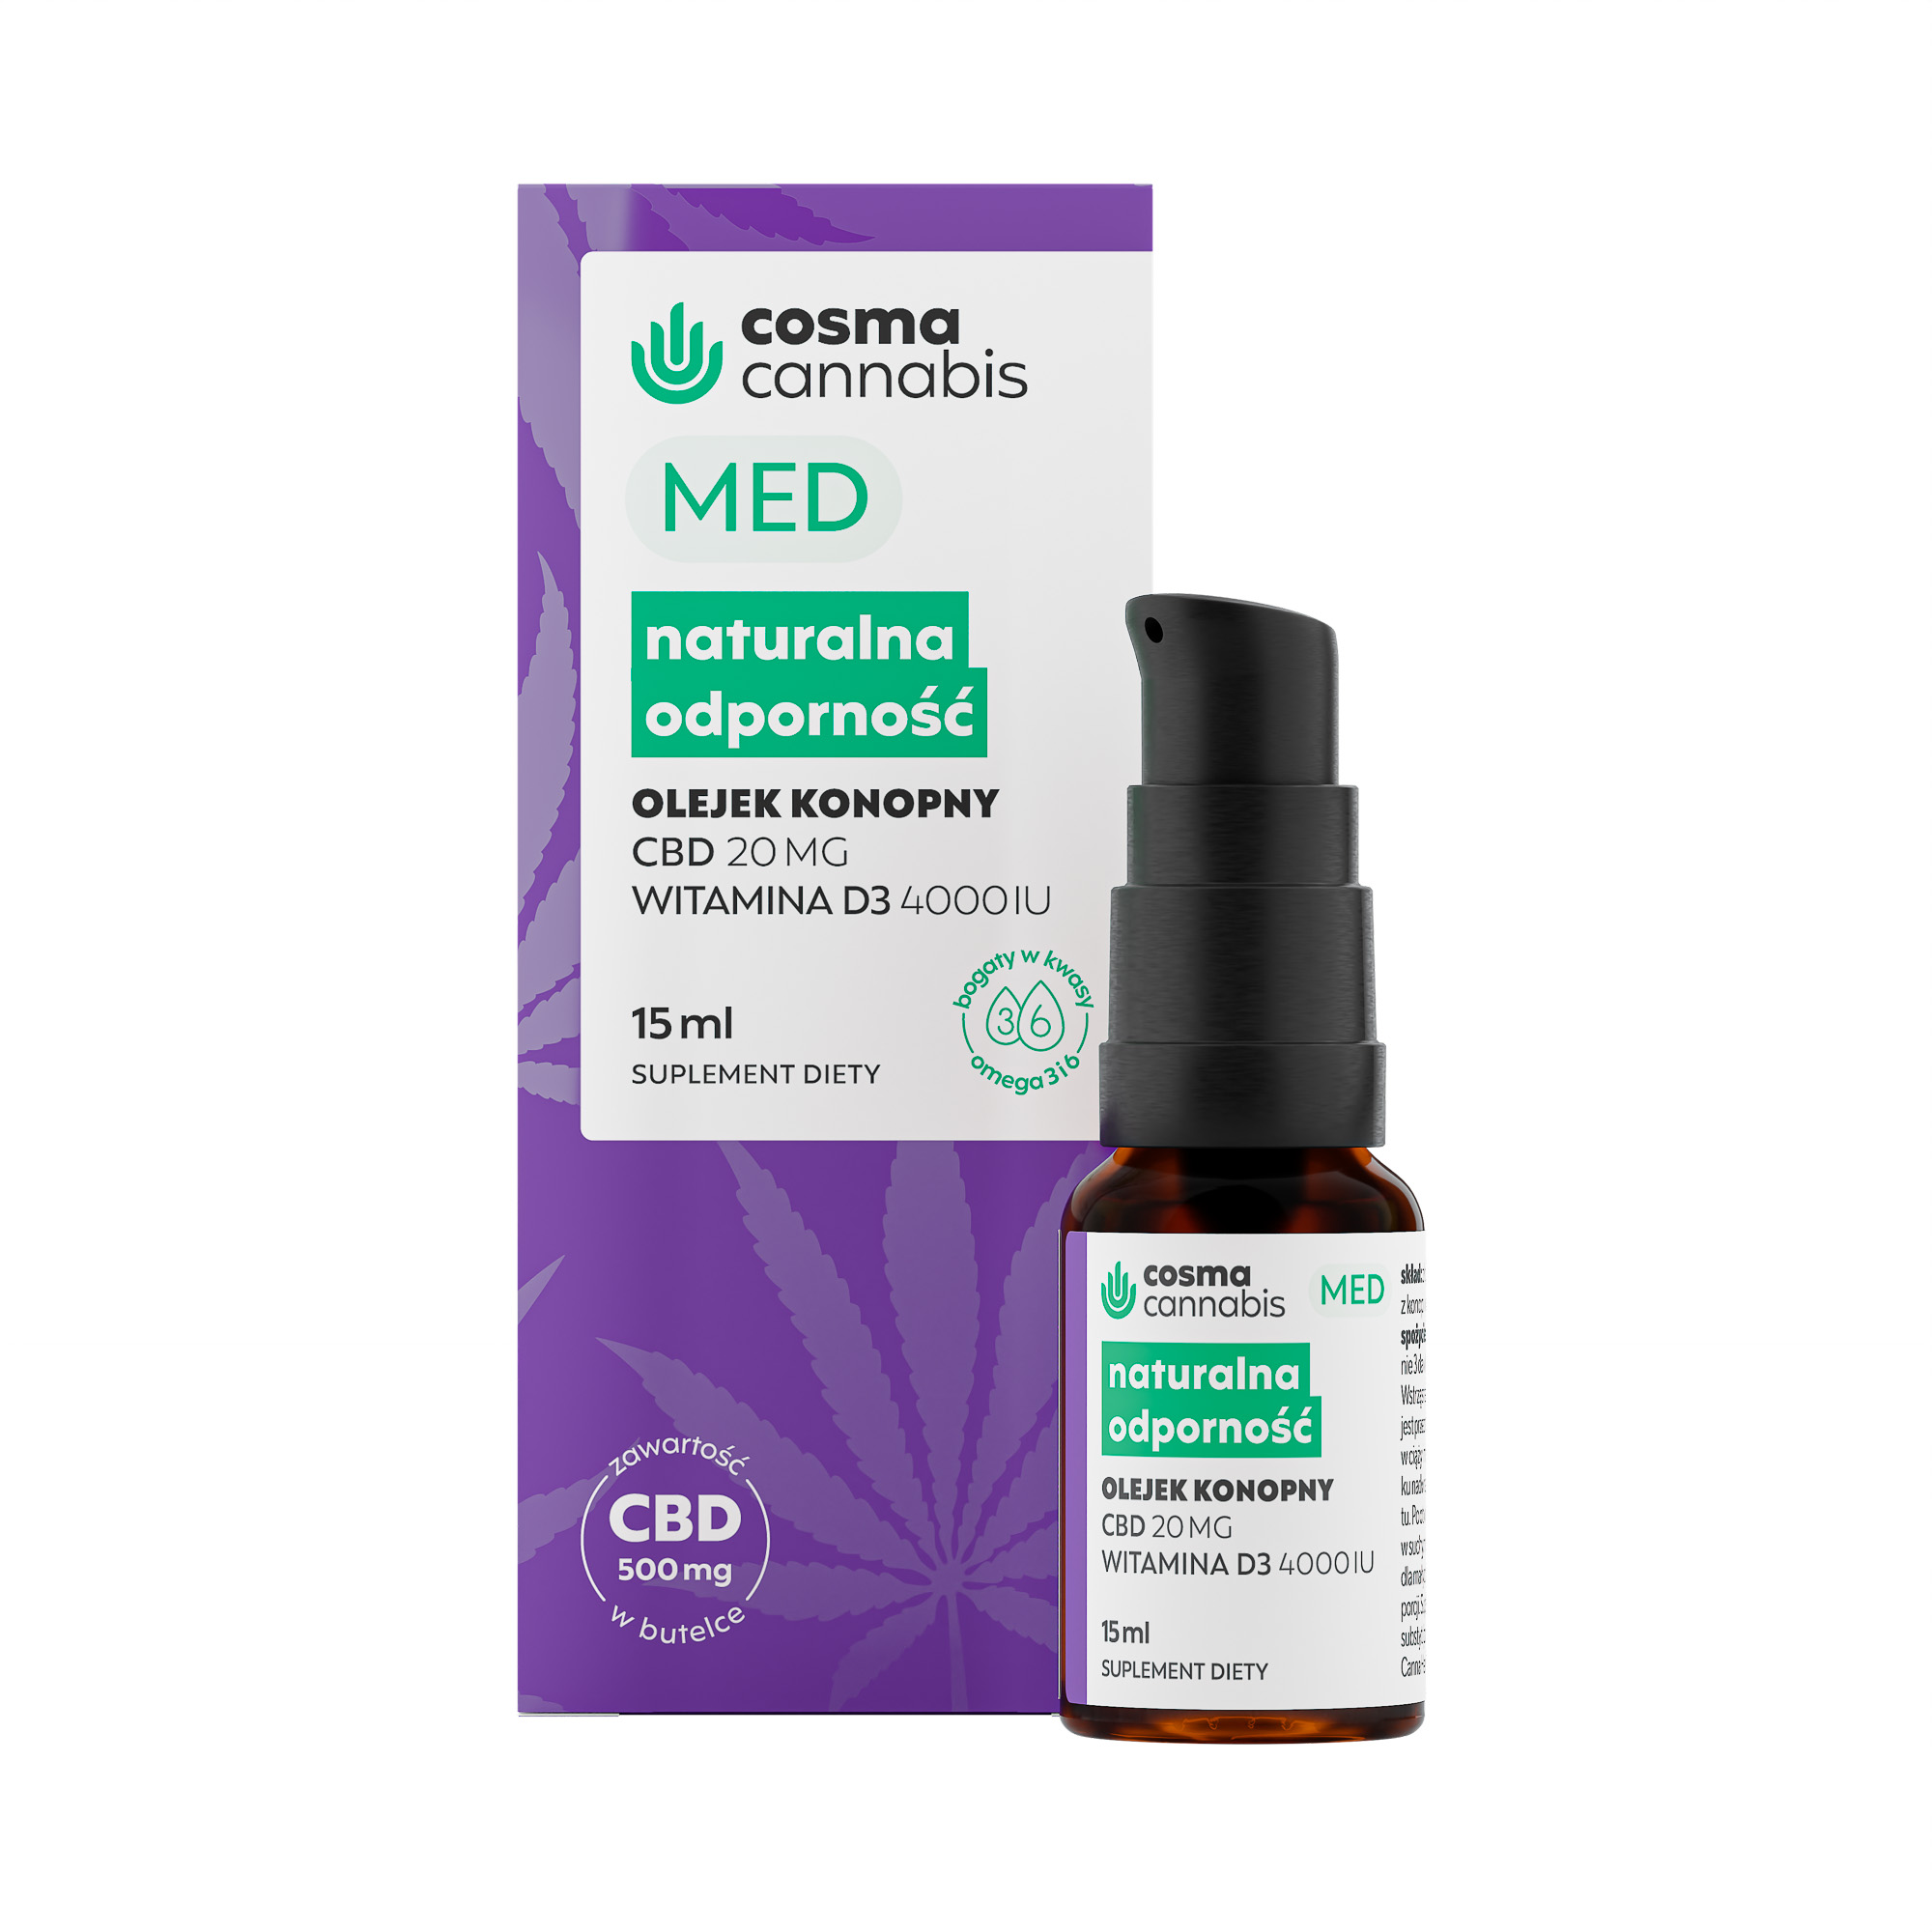 Cosma Cannabis Naturalna Odporność MED 15 ml